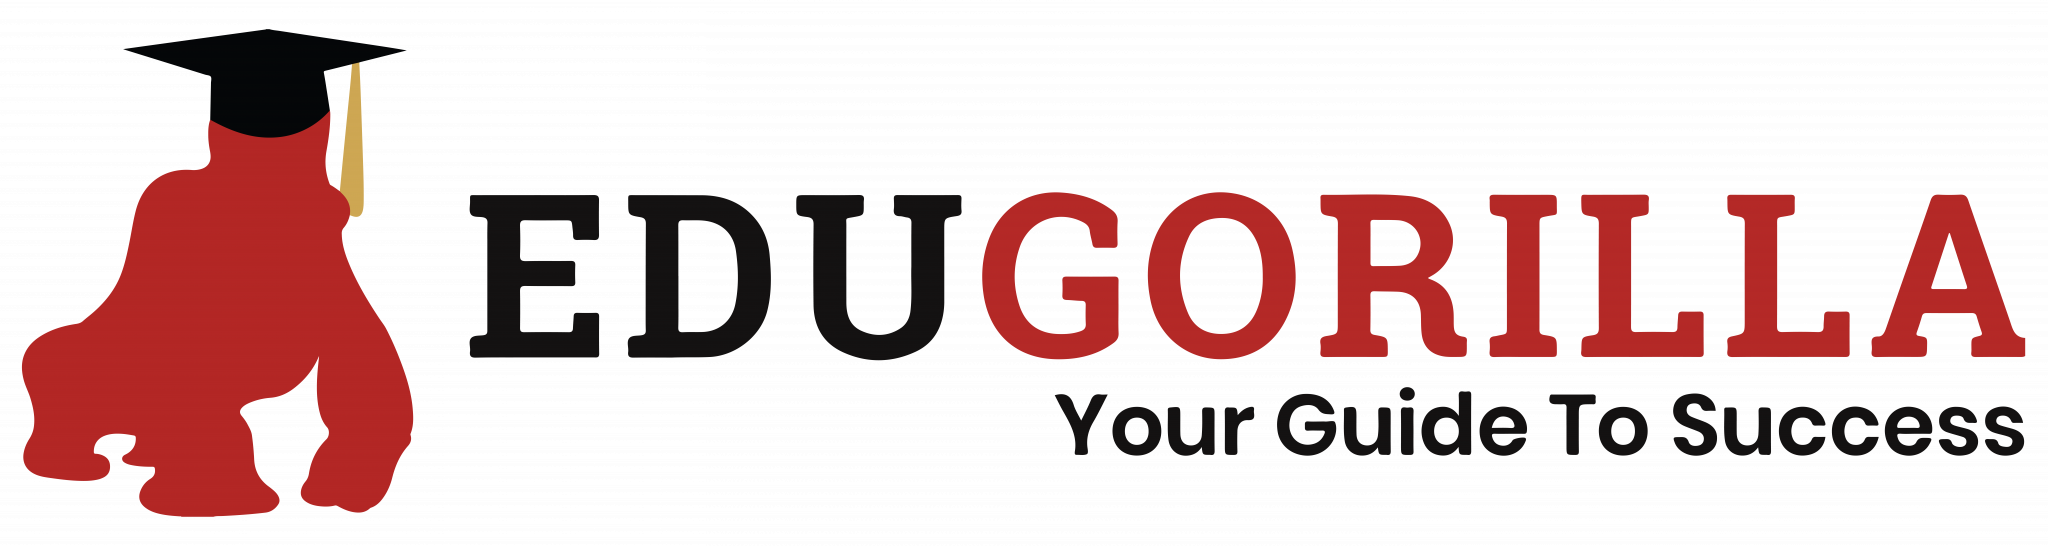 EduGorilla Logo